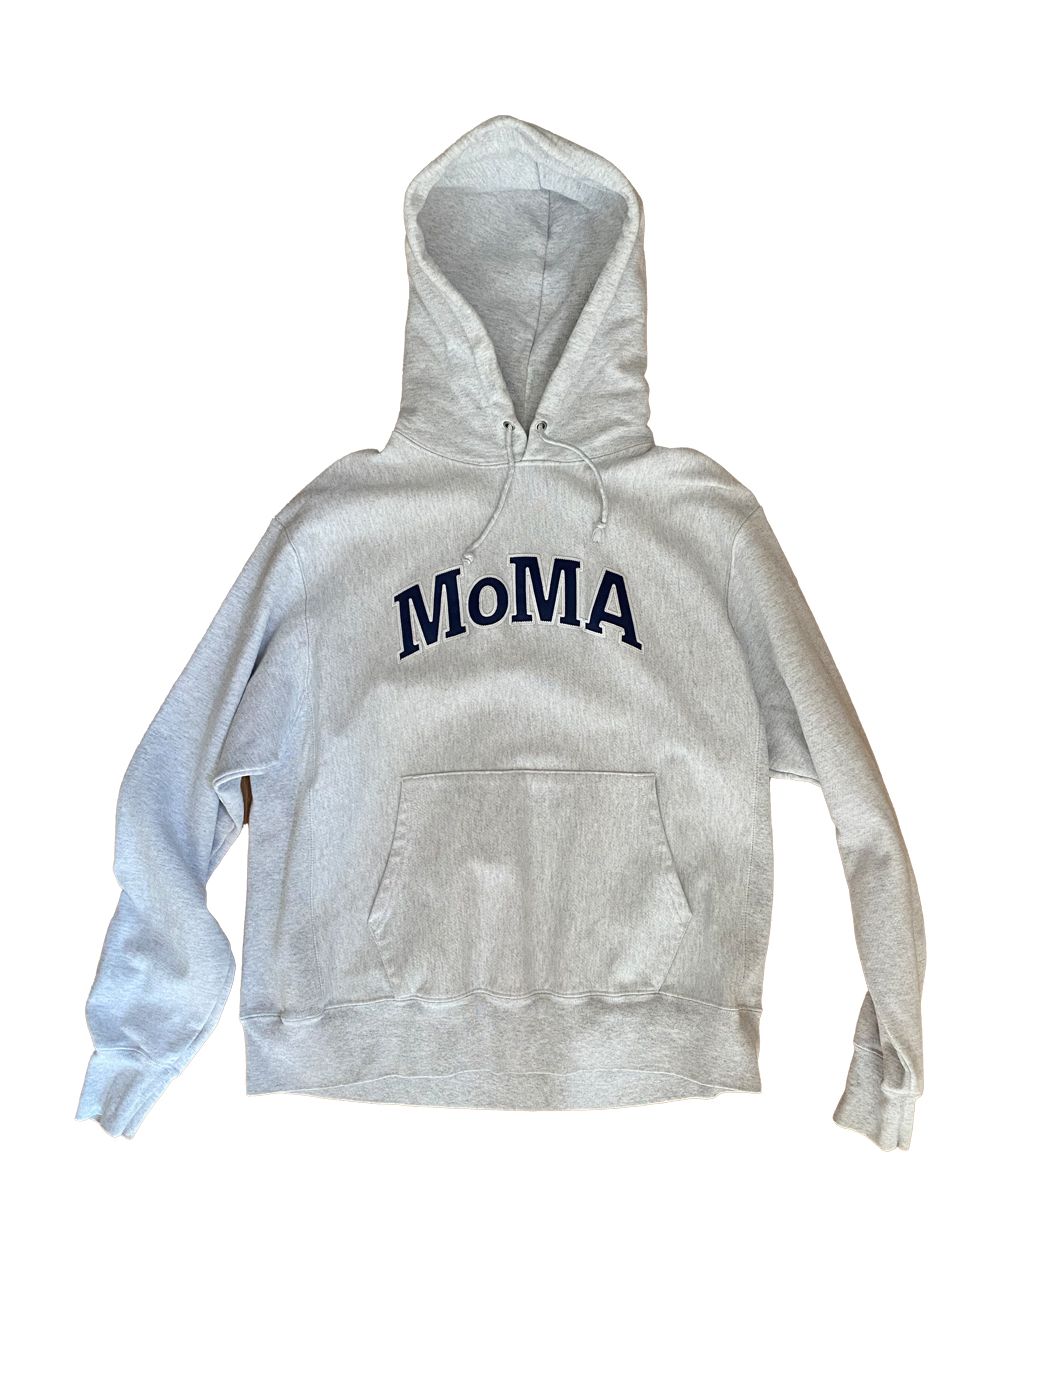 Champion MOMA Champion sweatshirt | Grailed